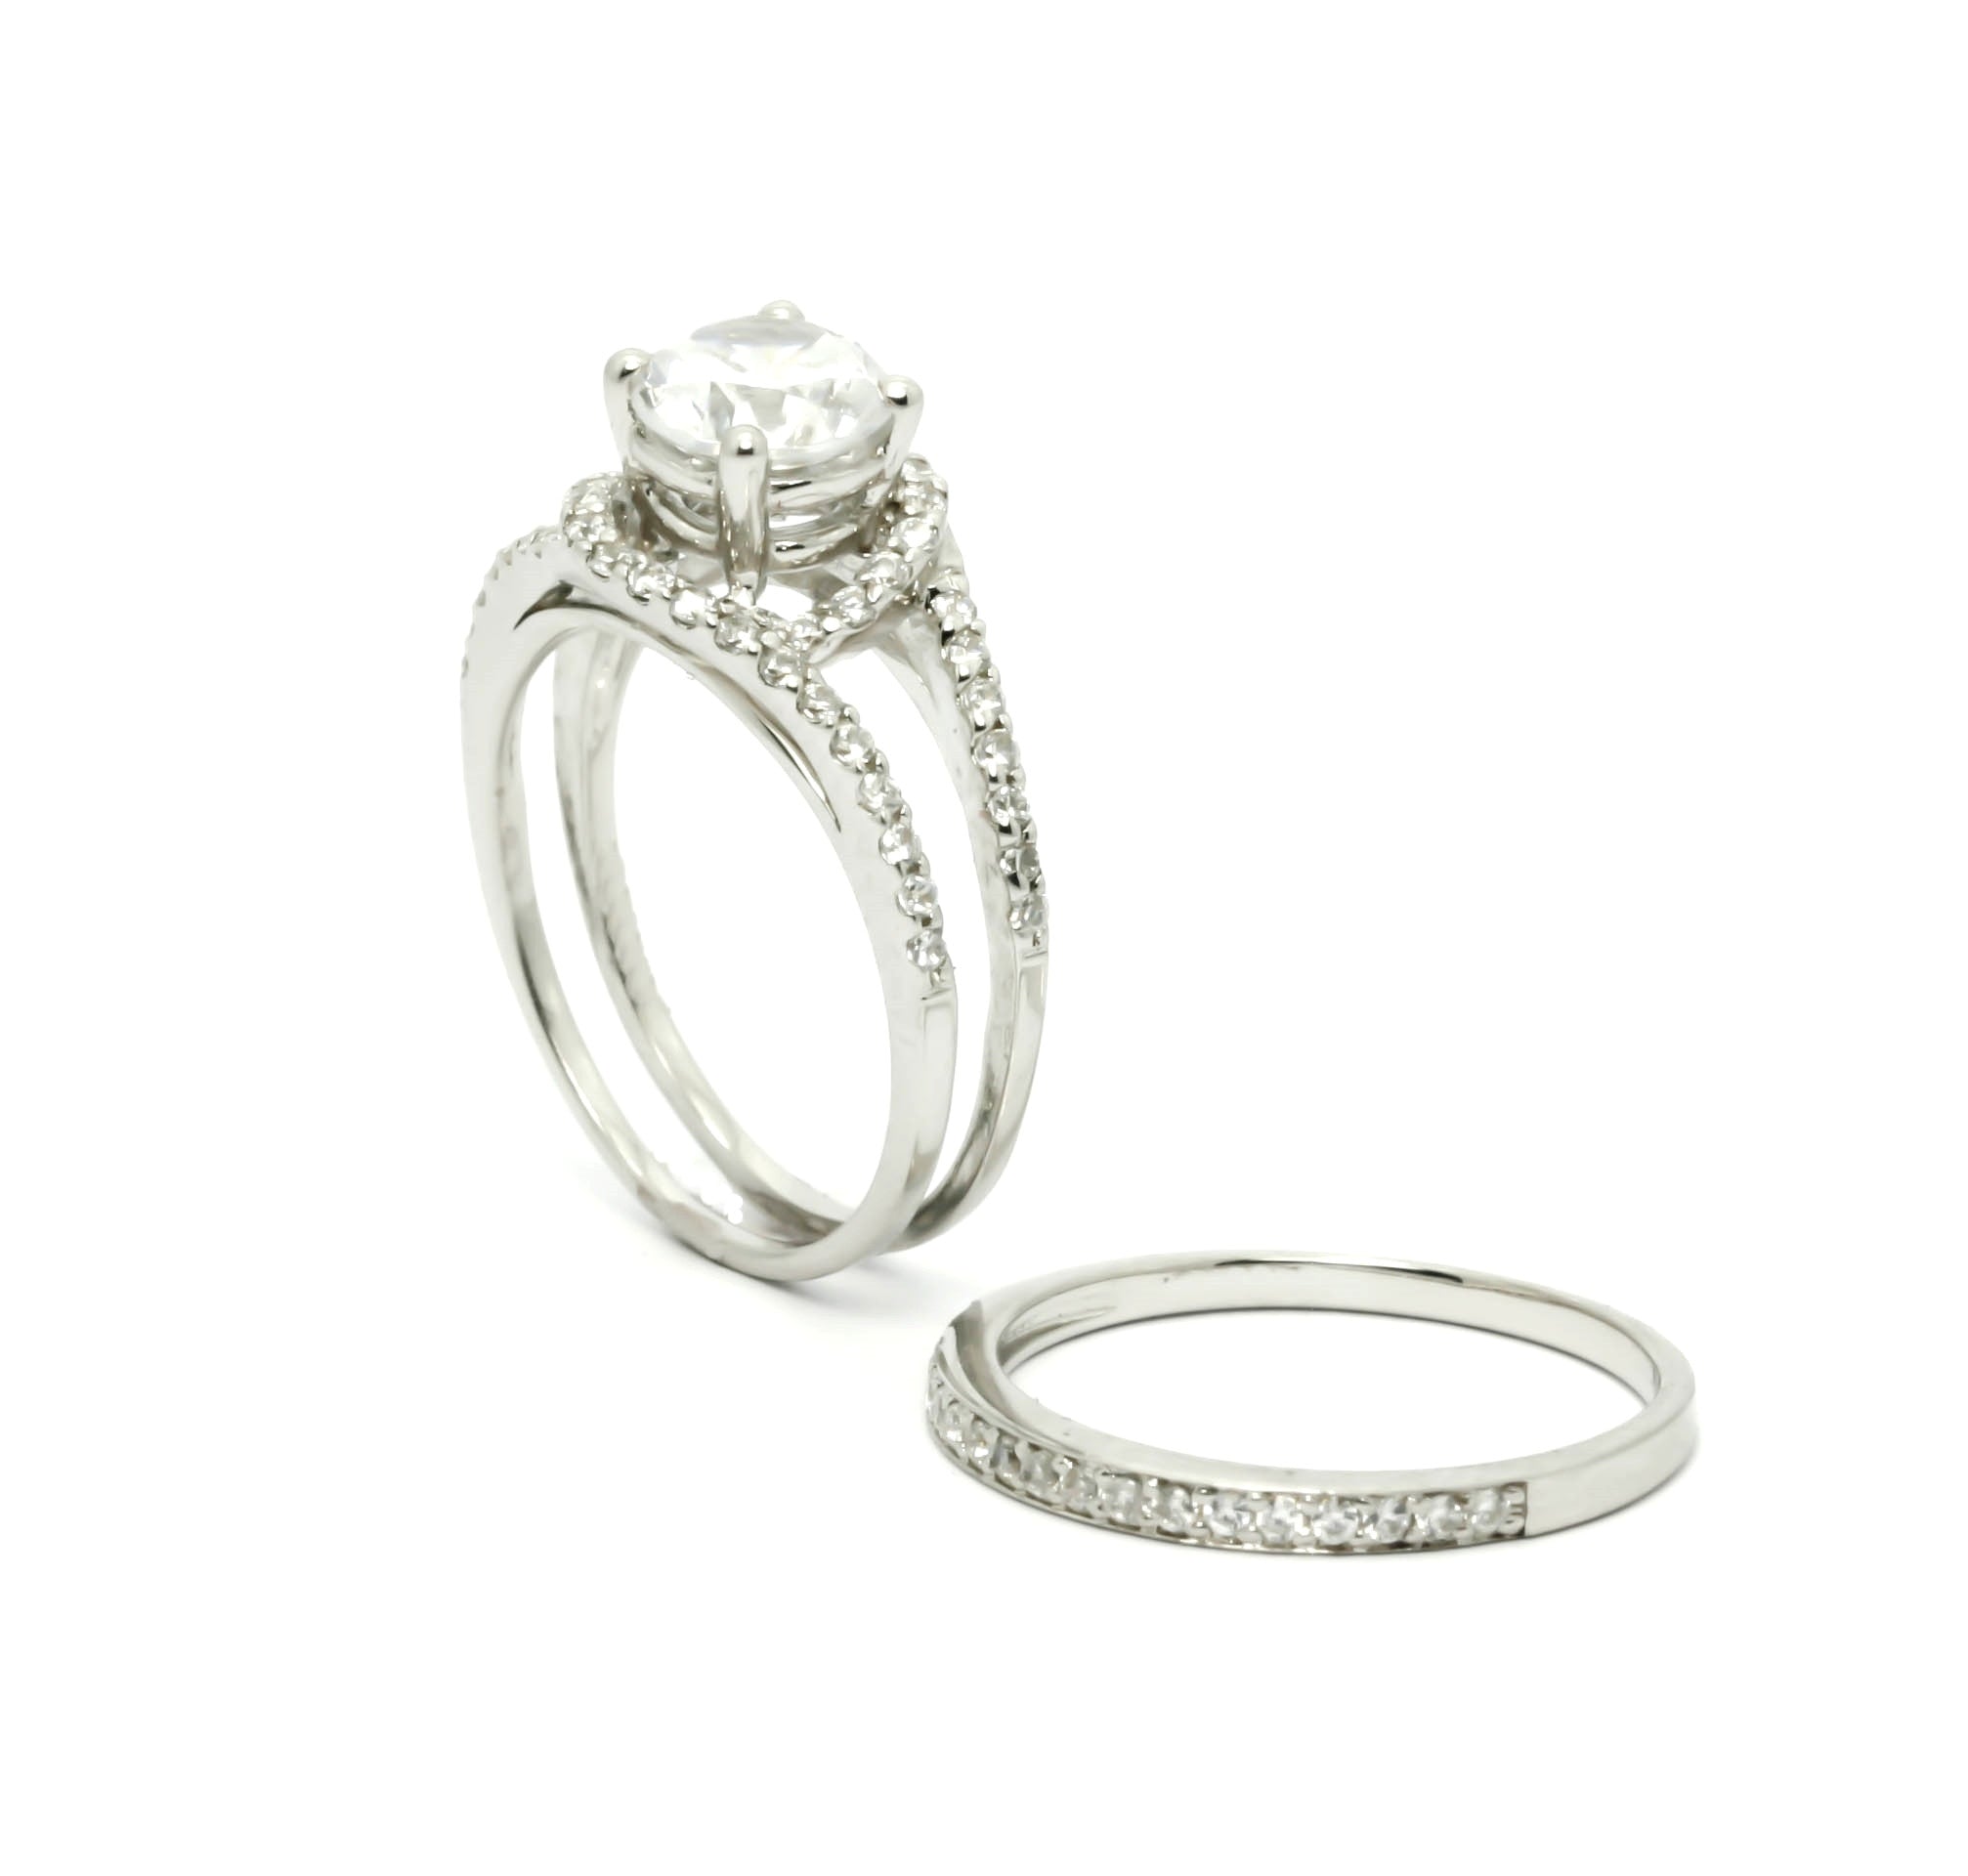 Semi Mount Unique Halo And Split Shank Design, Diamond Engagement/Wedding Set, For 1 Carat Center Stone Anniversary Ring - Y11580